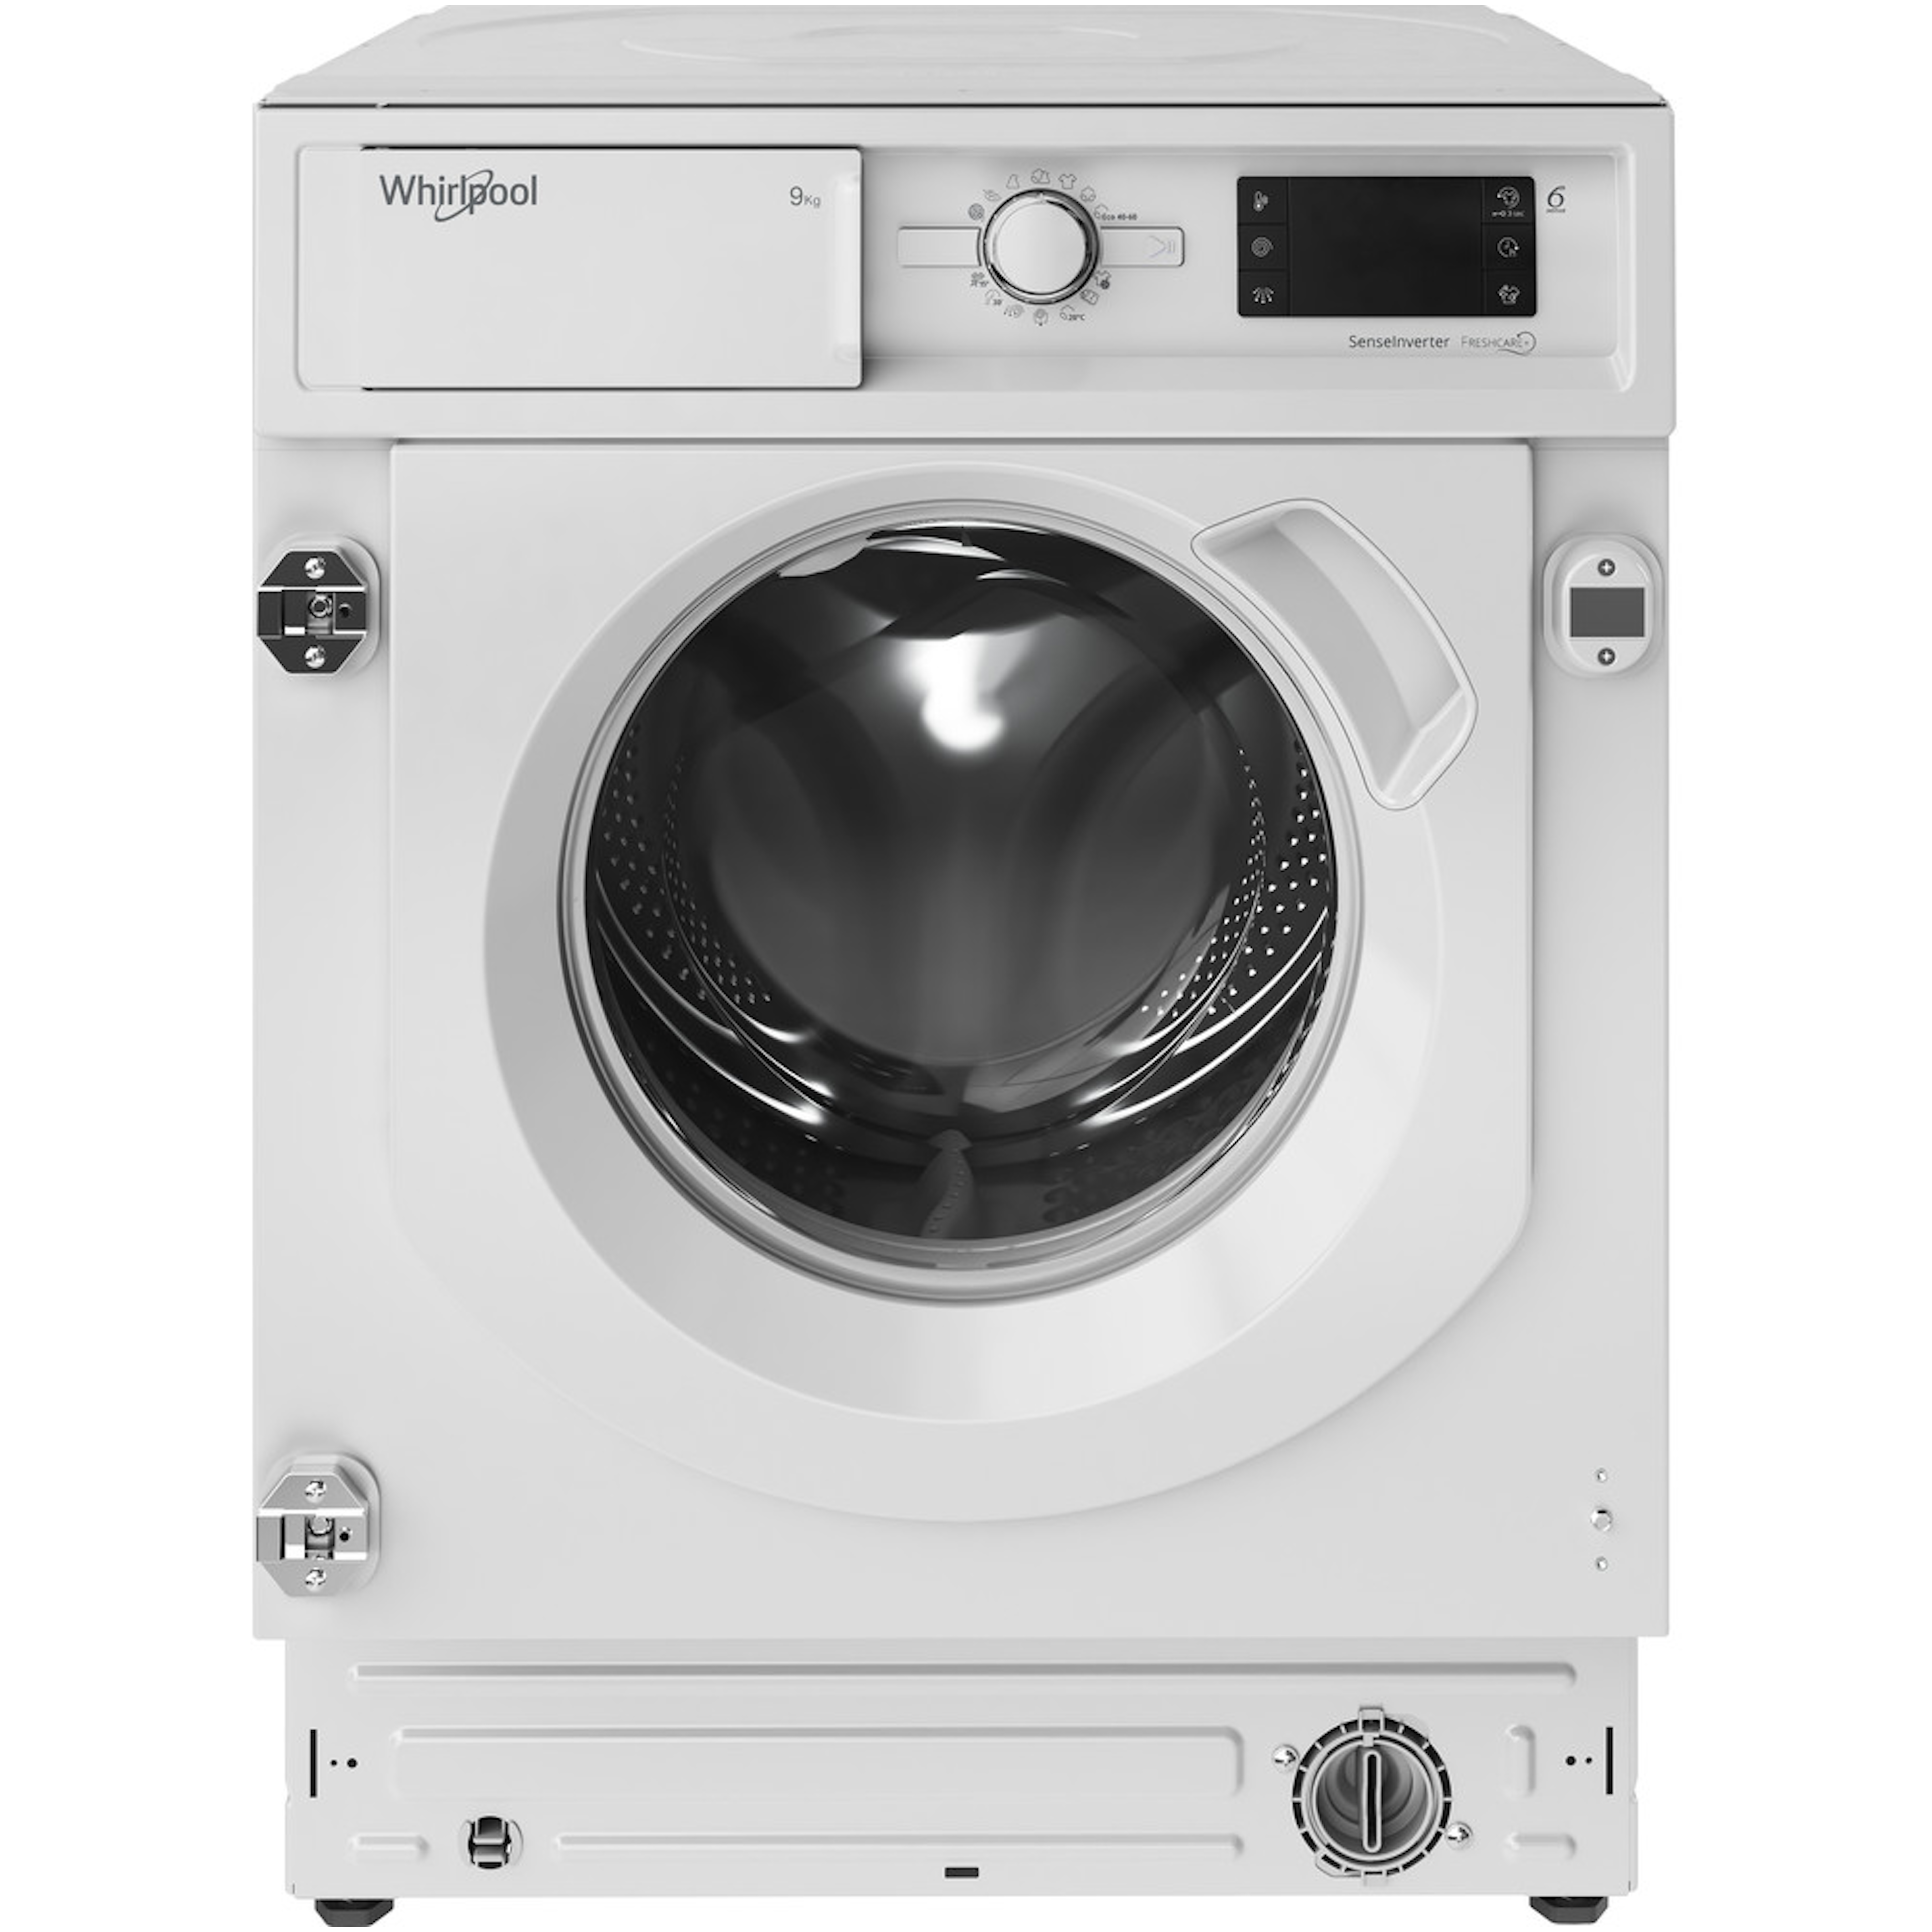 Whirlpool BIWMWG91485EU wasmachine afbeelding 1